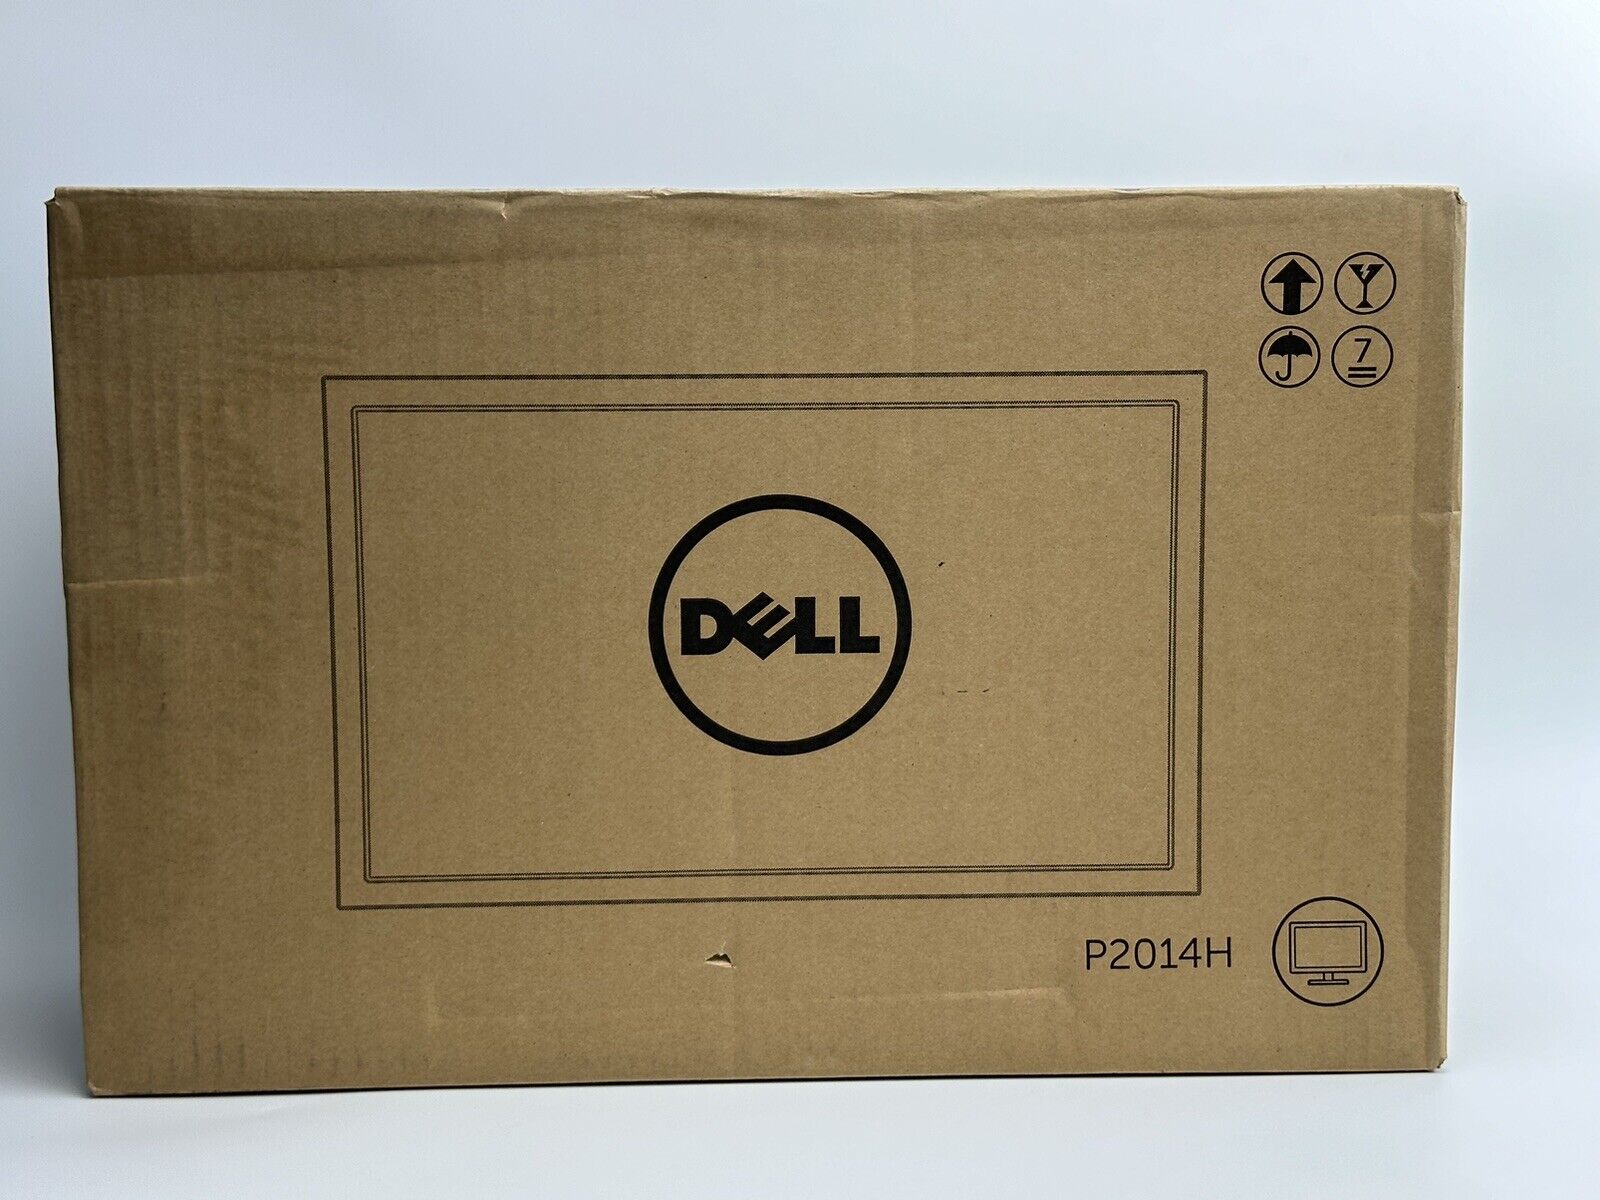 New Dell Professional P2014H 19.5-Inch Widescreen Monitor 1600 x 900